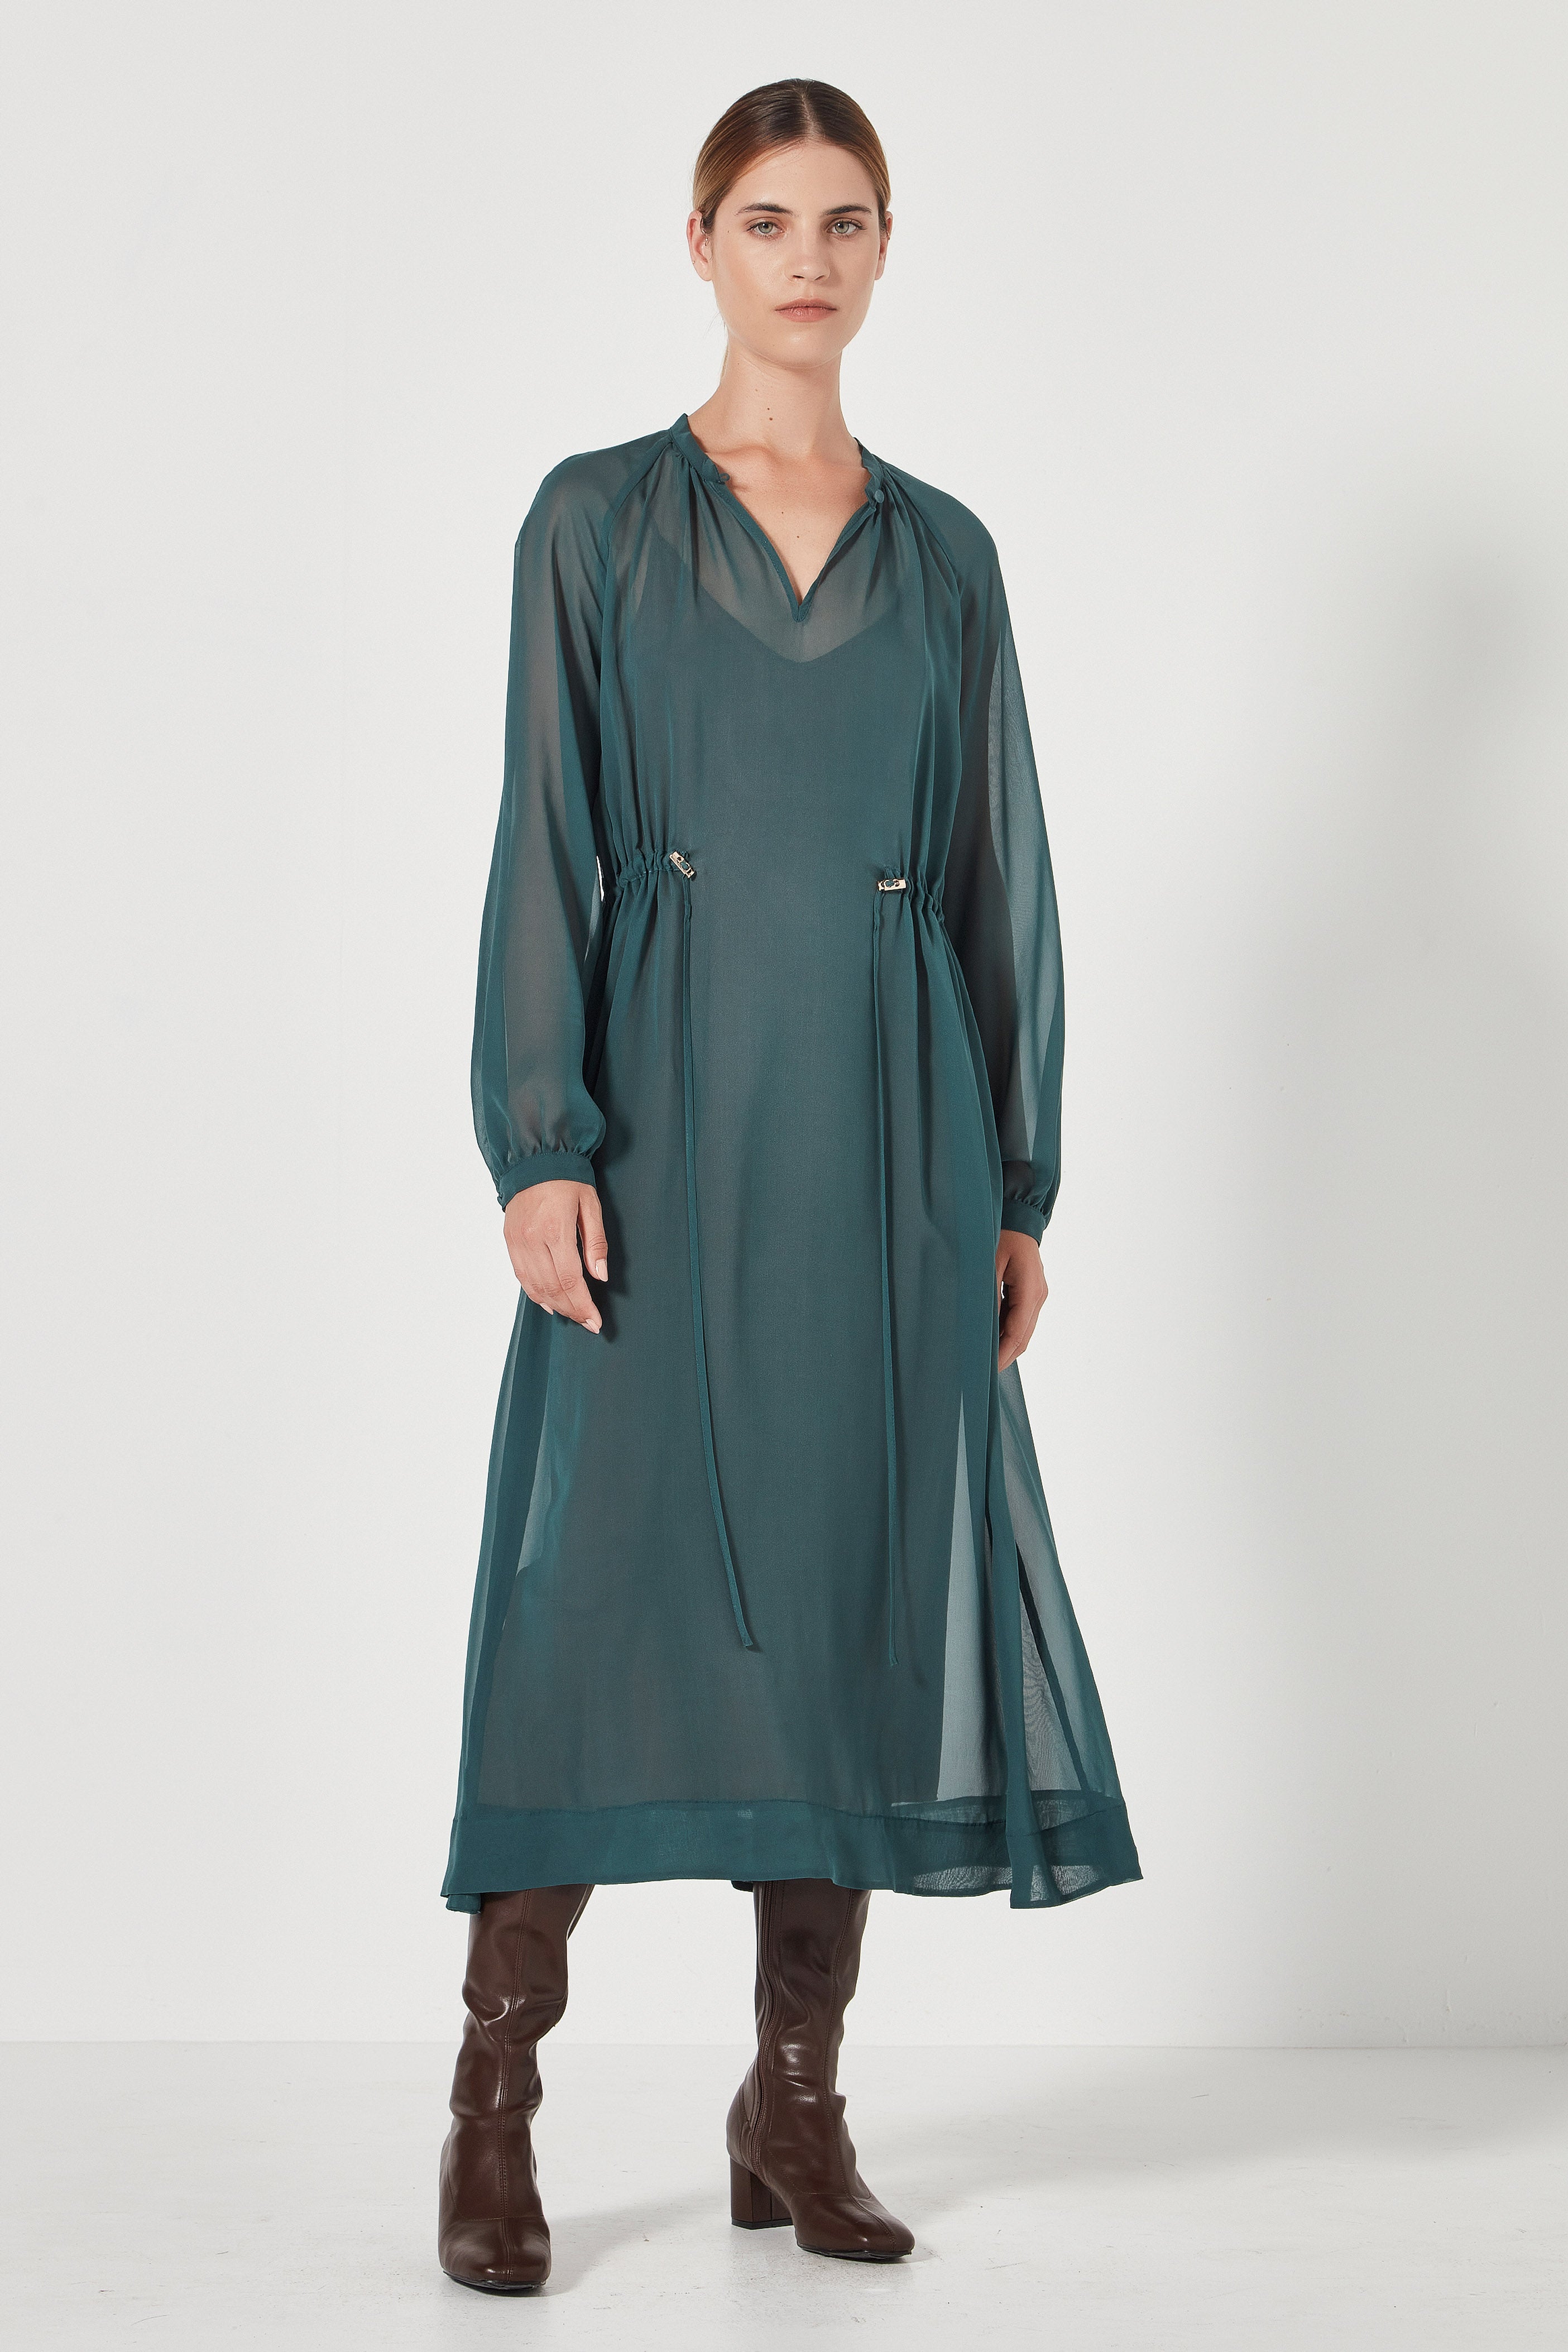 The Otto Dress in Jade Silk Chiffon